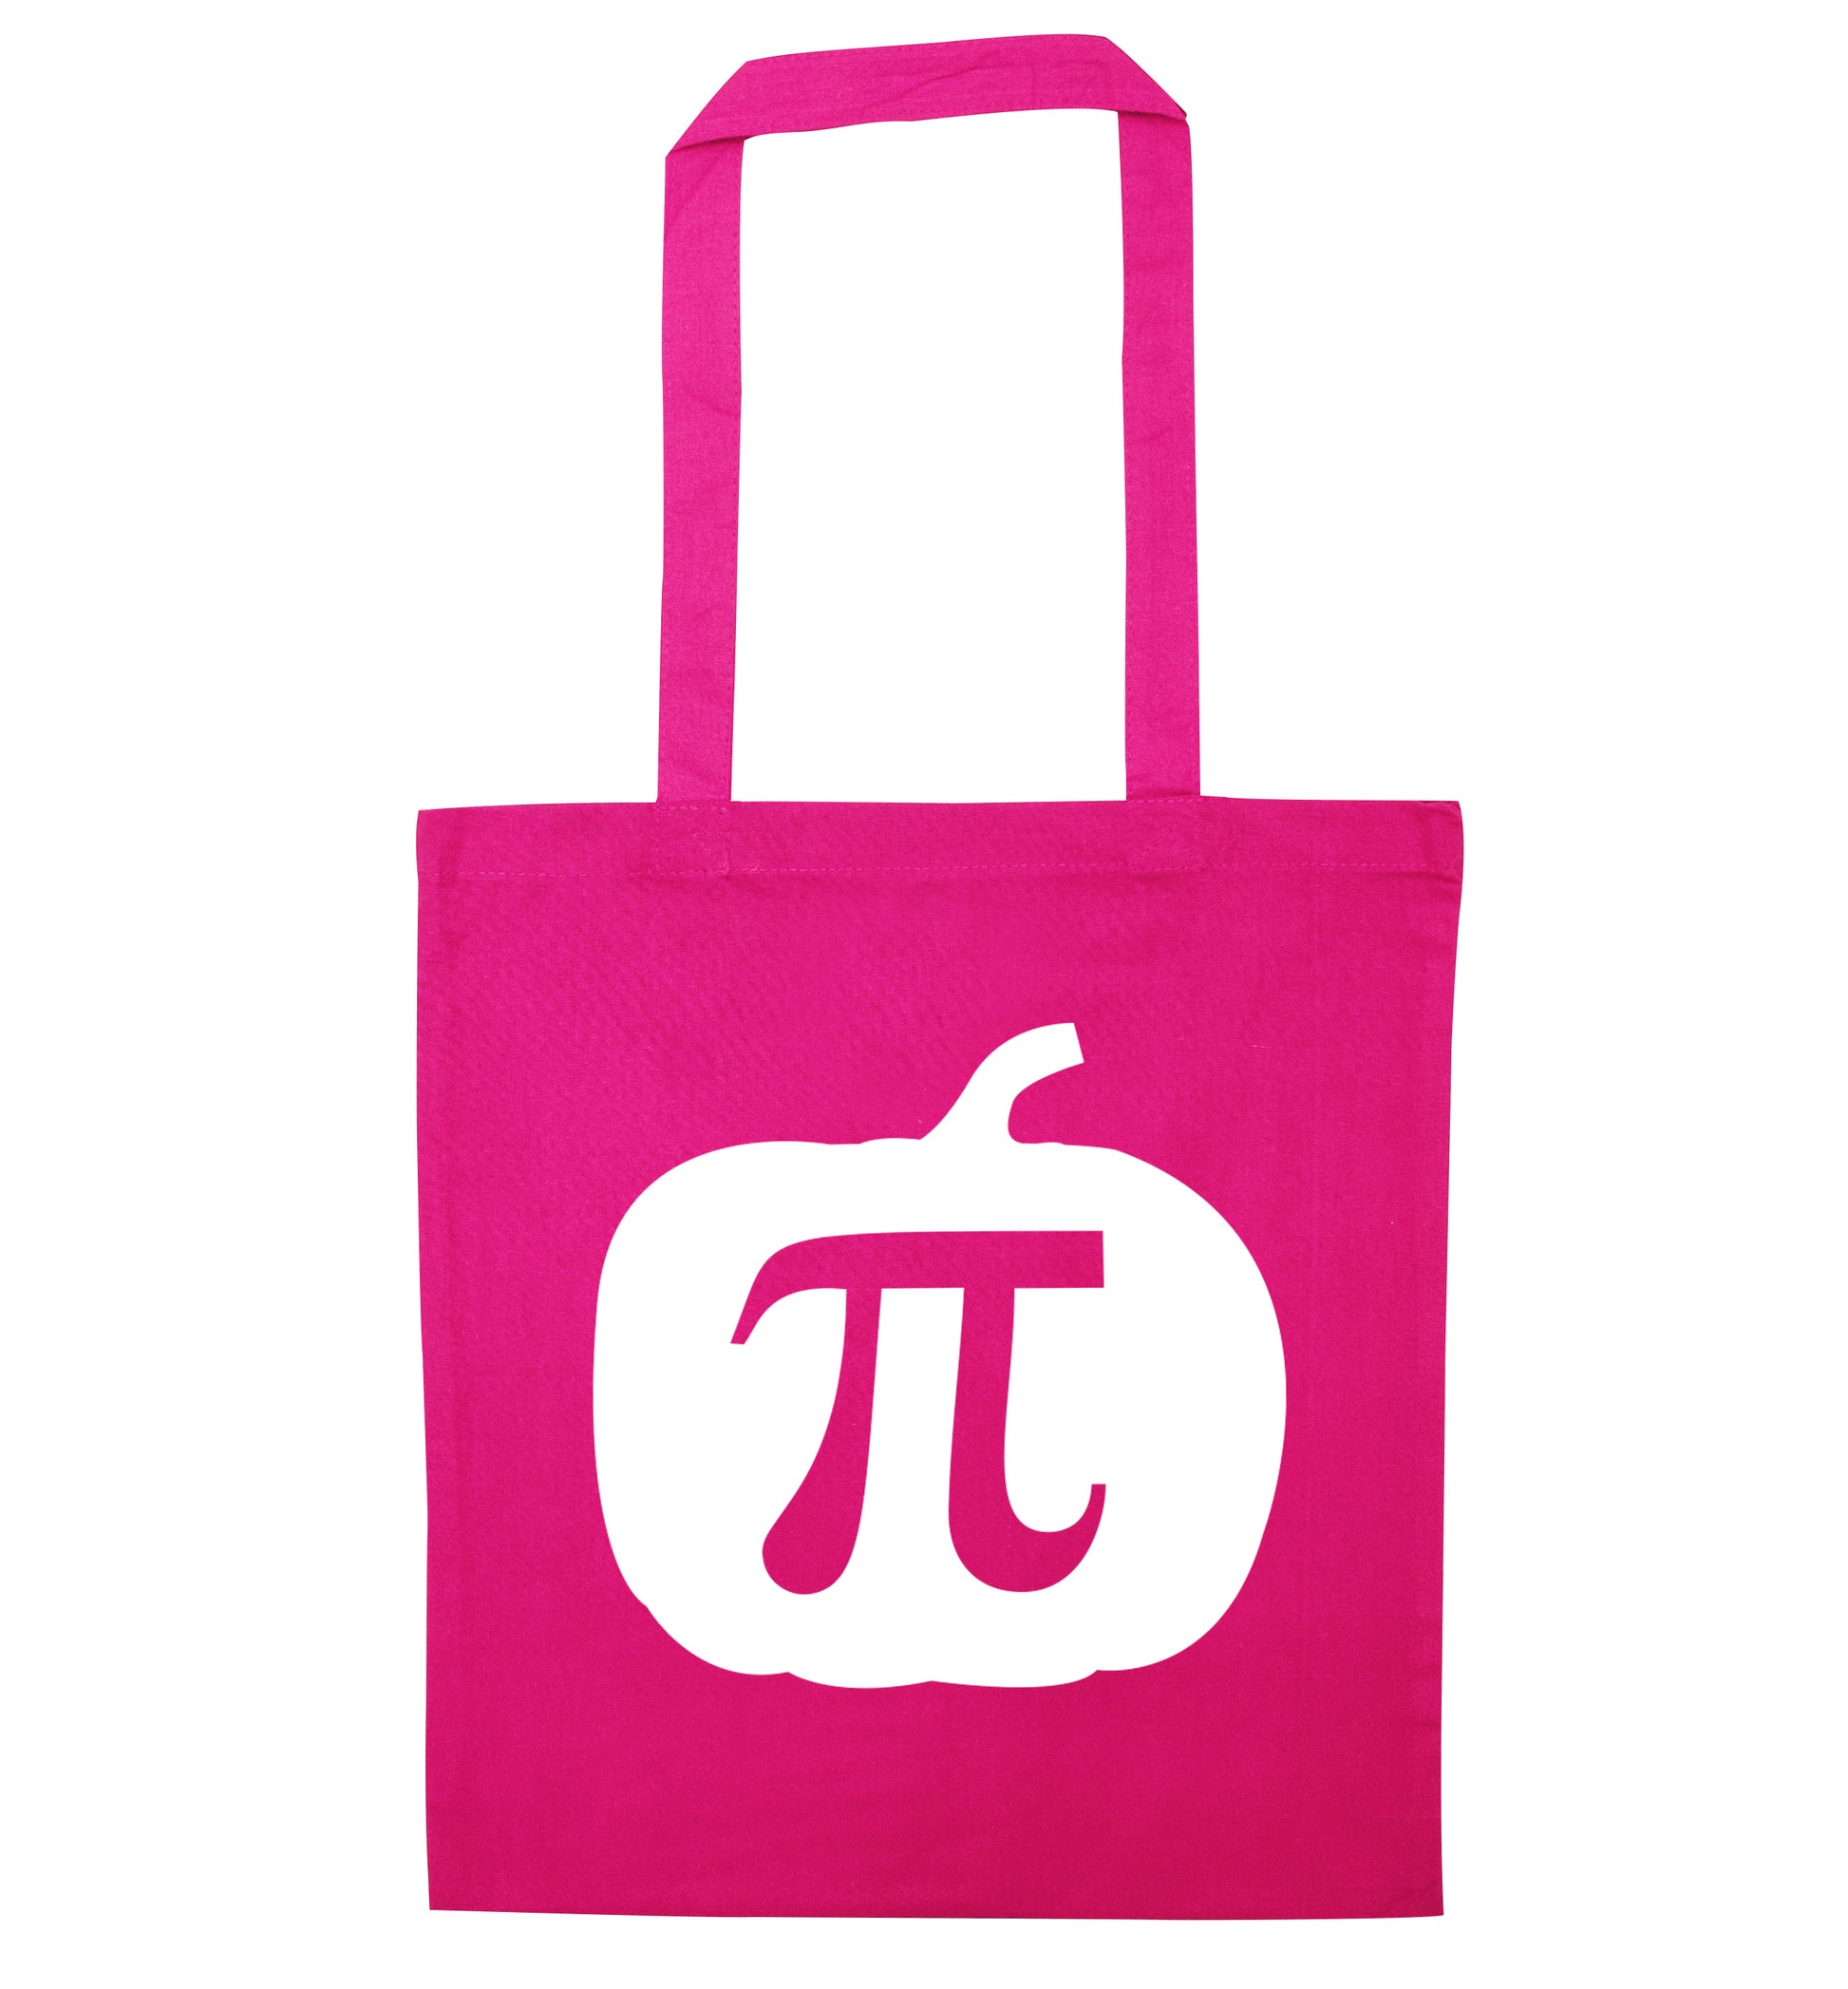 Pumpkin Pi pink tote bag